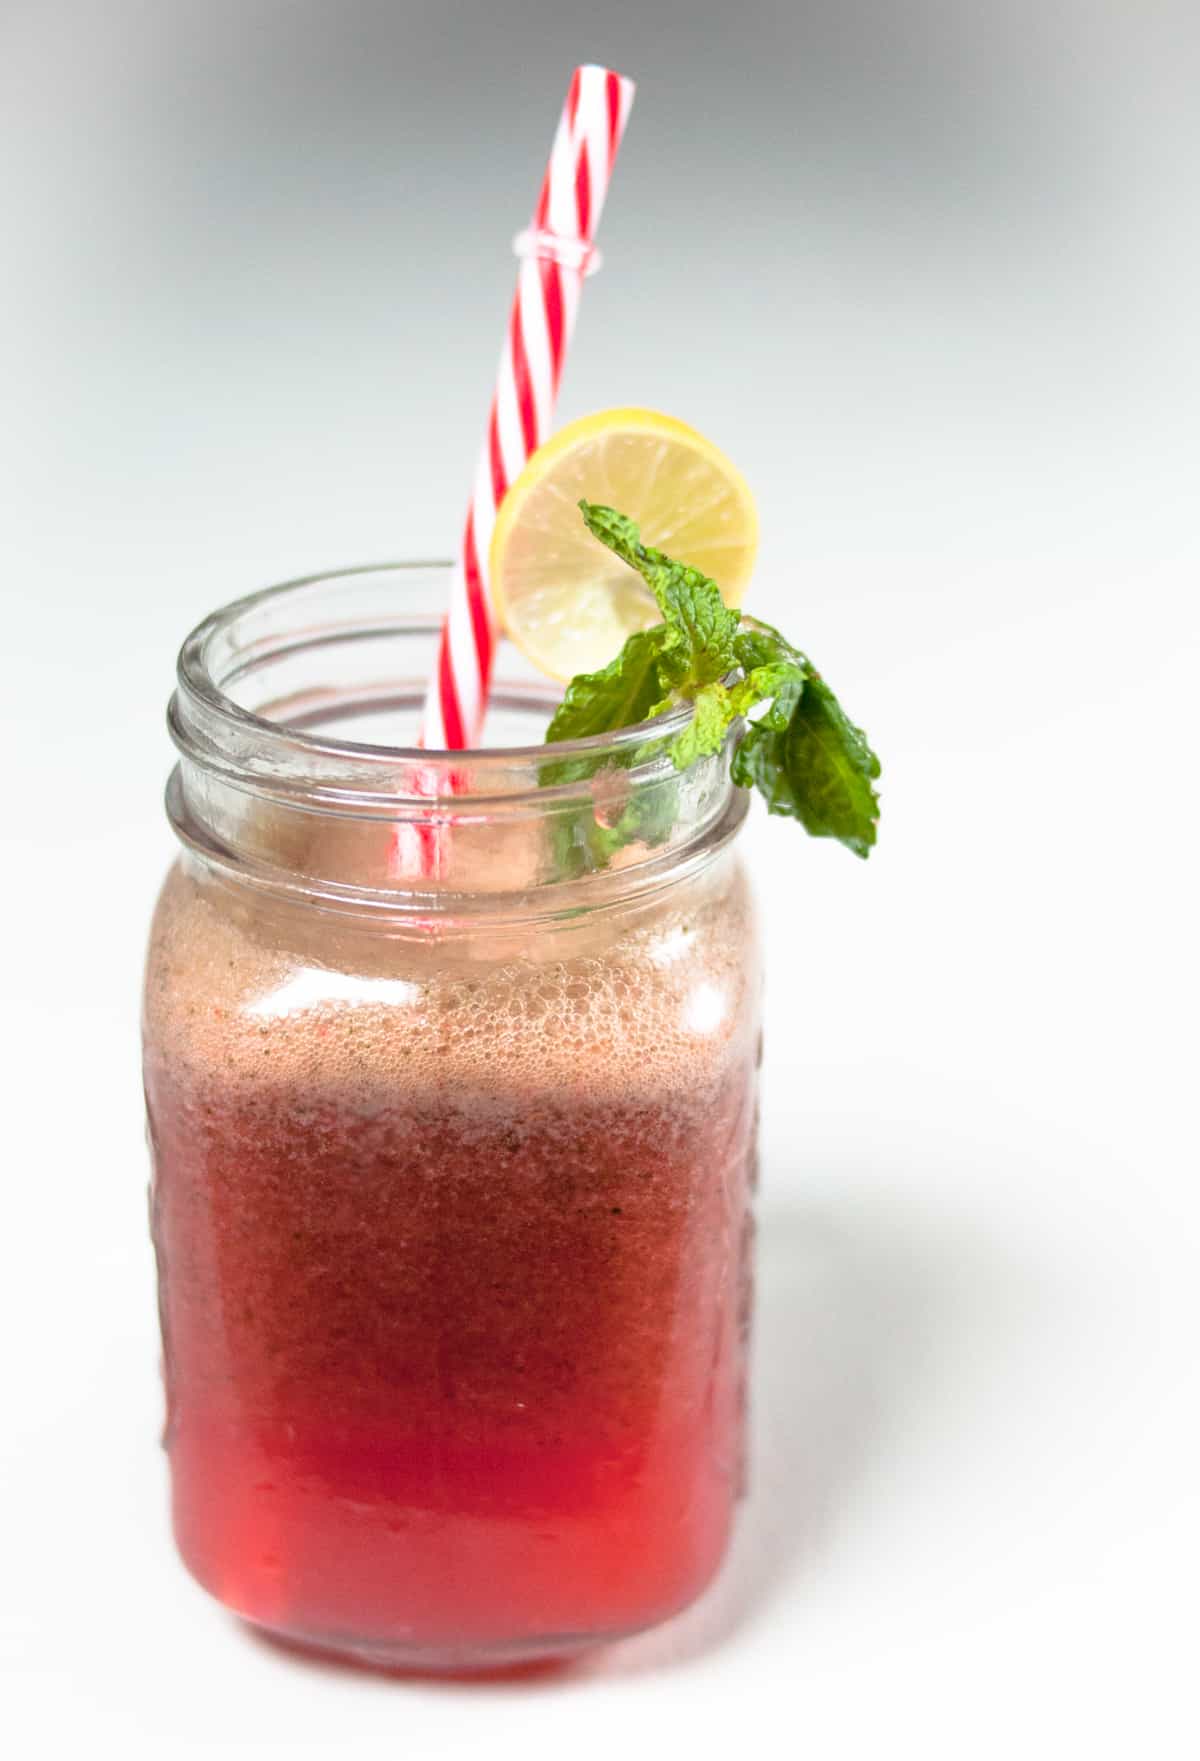 Strawberry mint lemonade served in a jug.